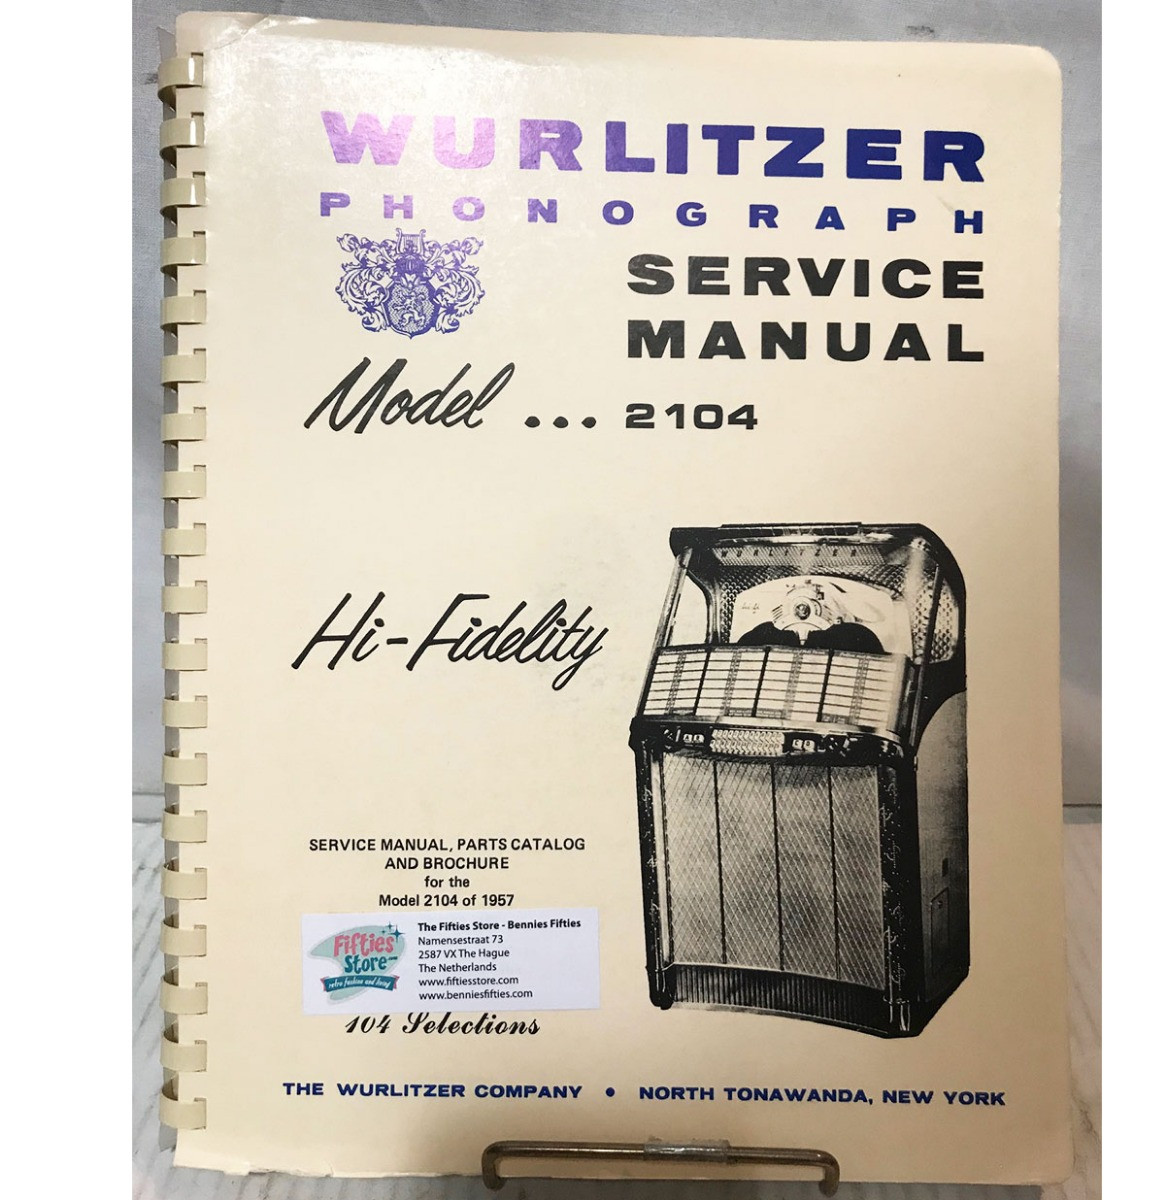 Service Manual - Wurlitzer Jukebox Model 2104